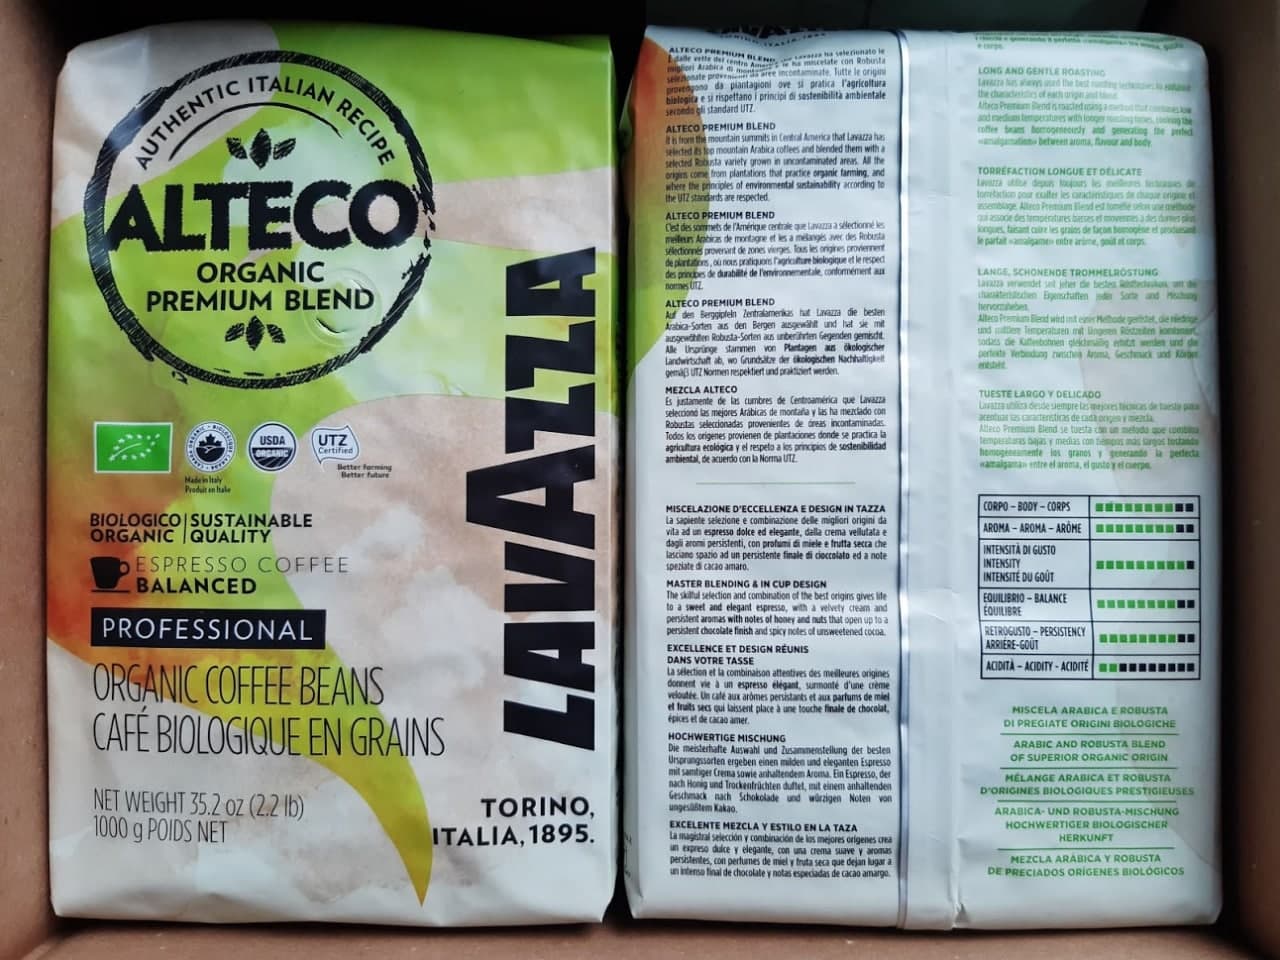 Pupiņu kafija "LAVAZZA" Alteco Organic Premium Blend